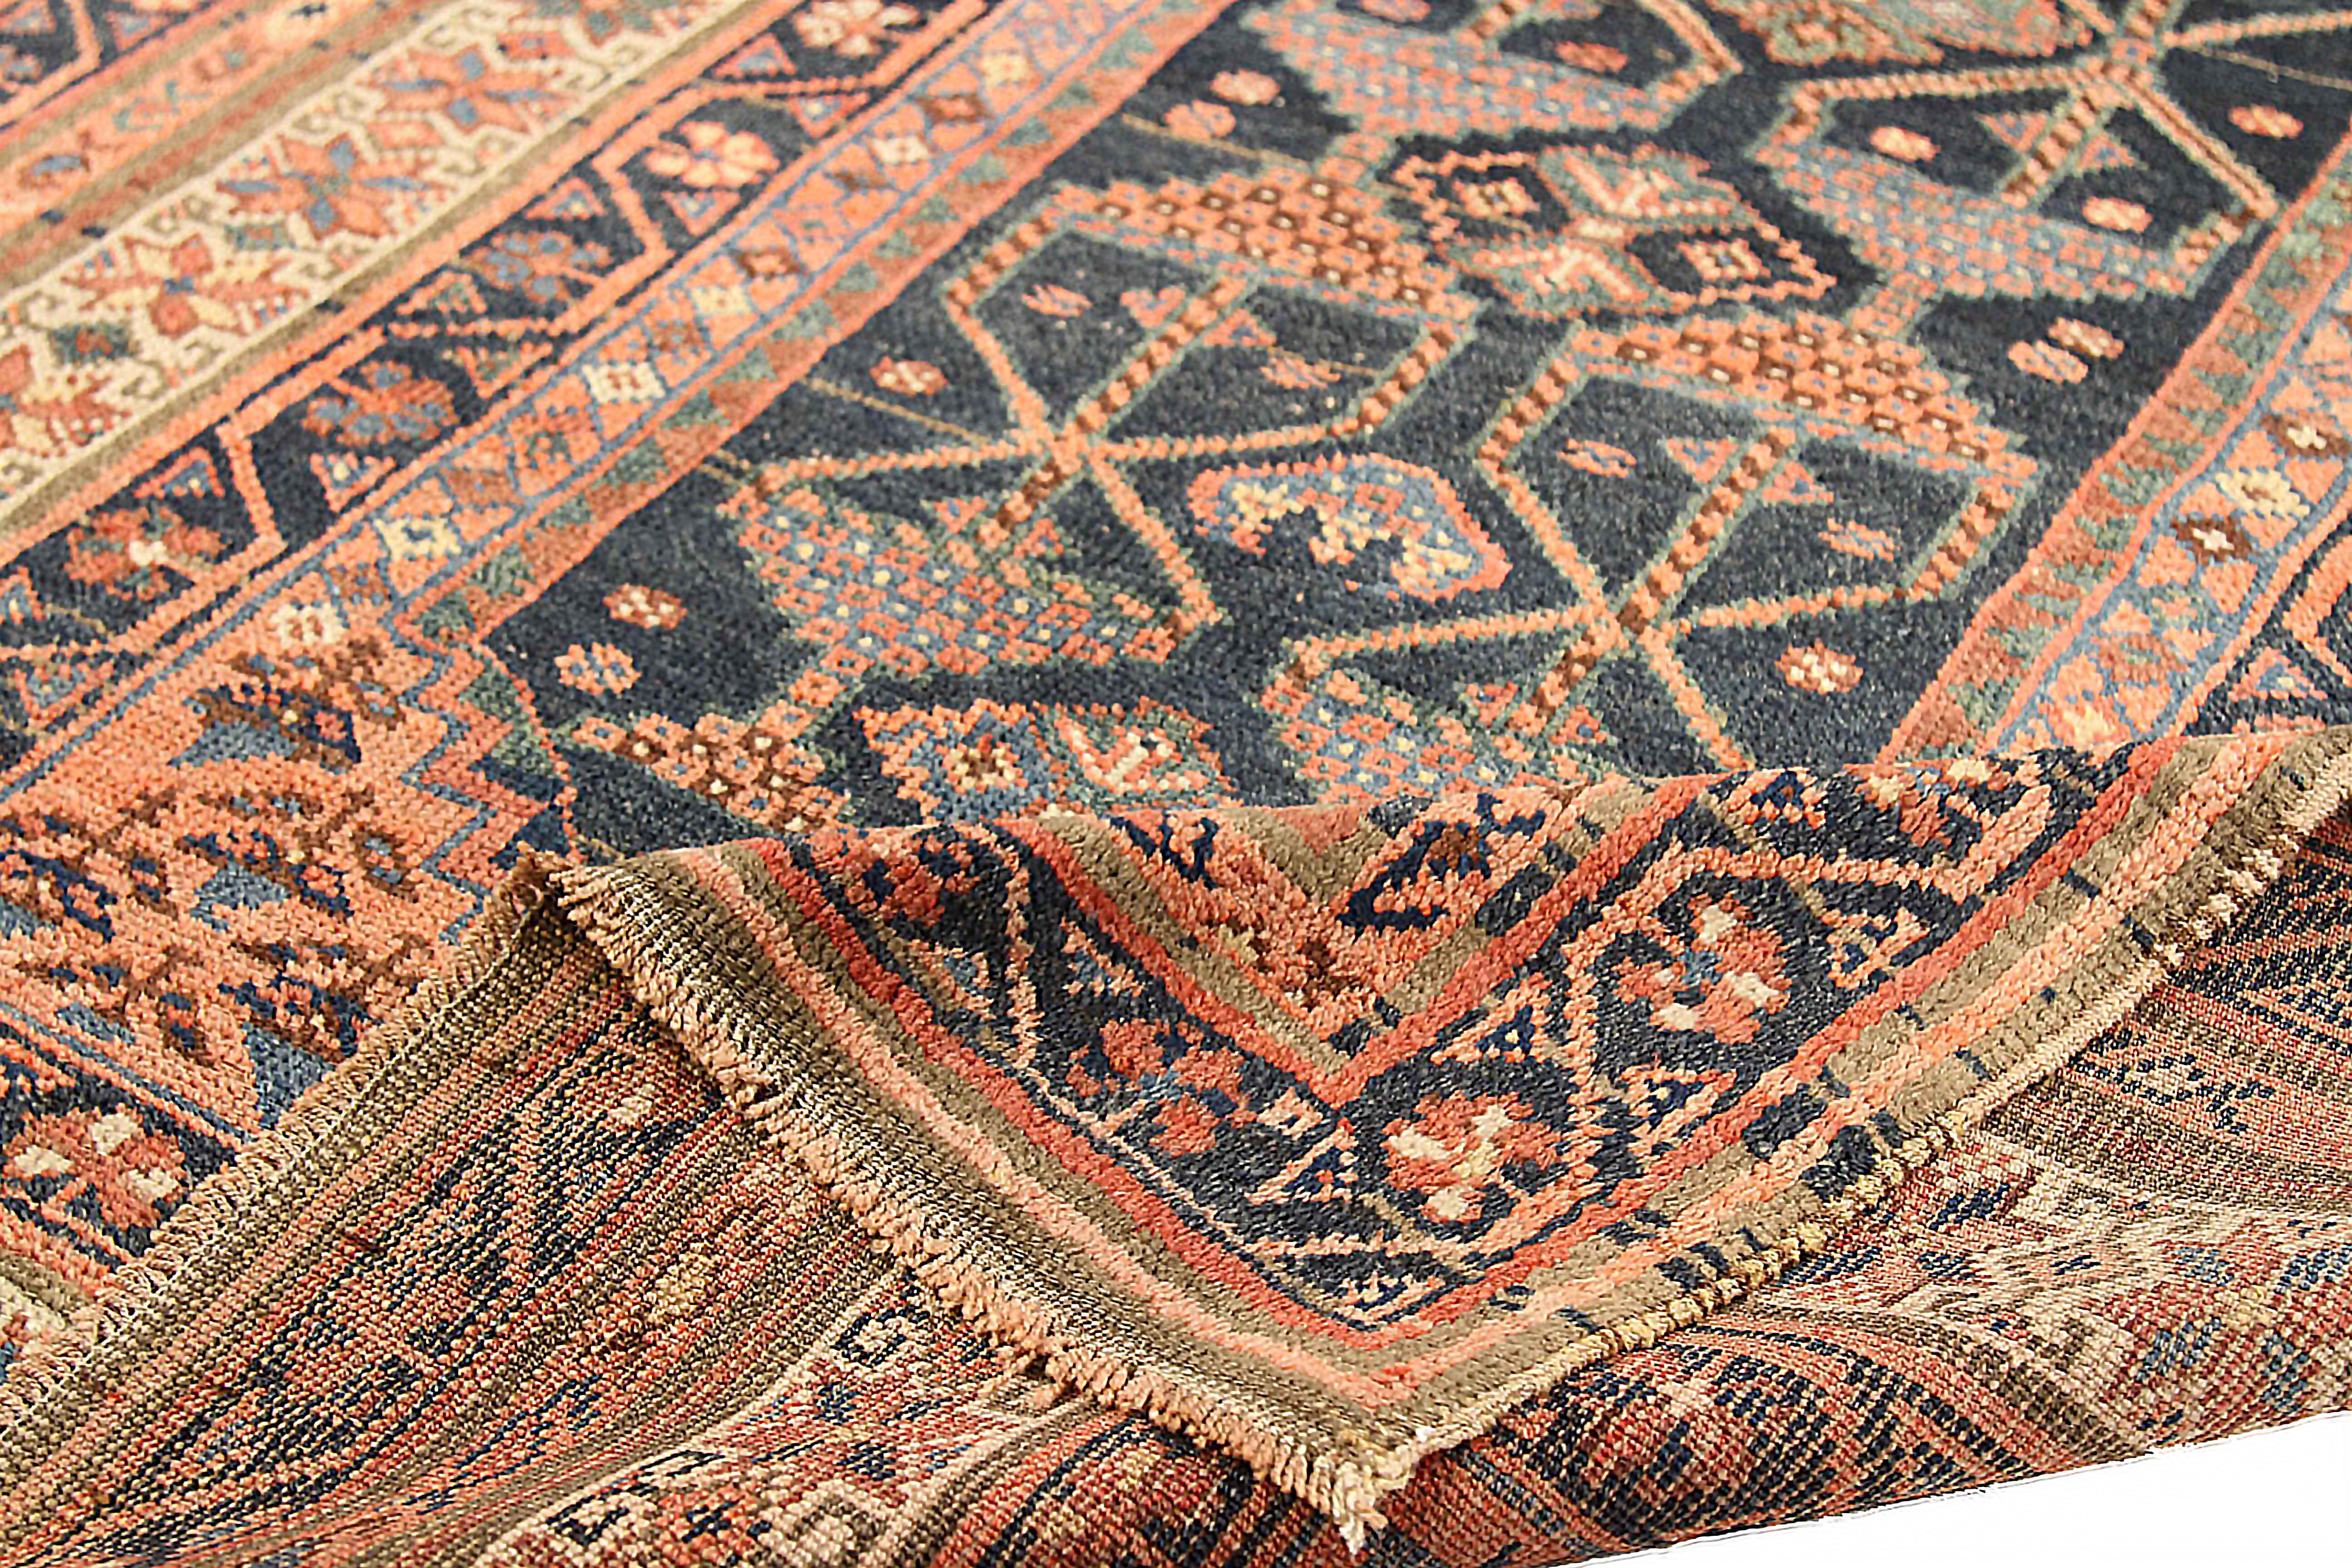 Hand-Woven Antique Persian Area Rug Lori Design For Sale